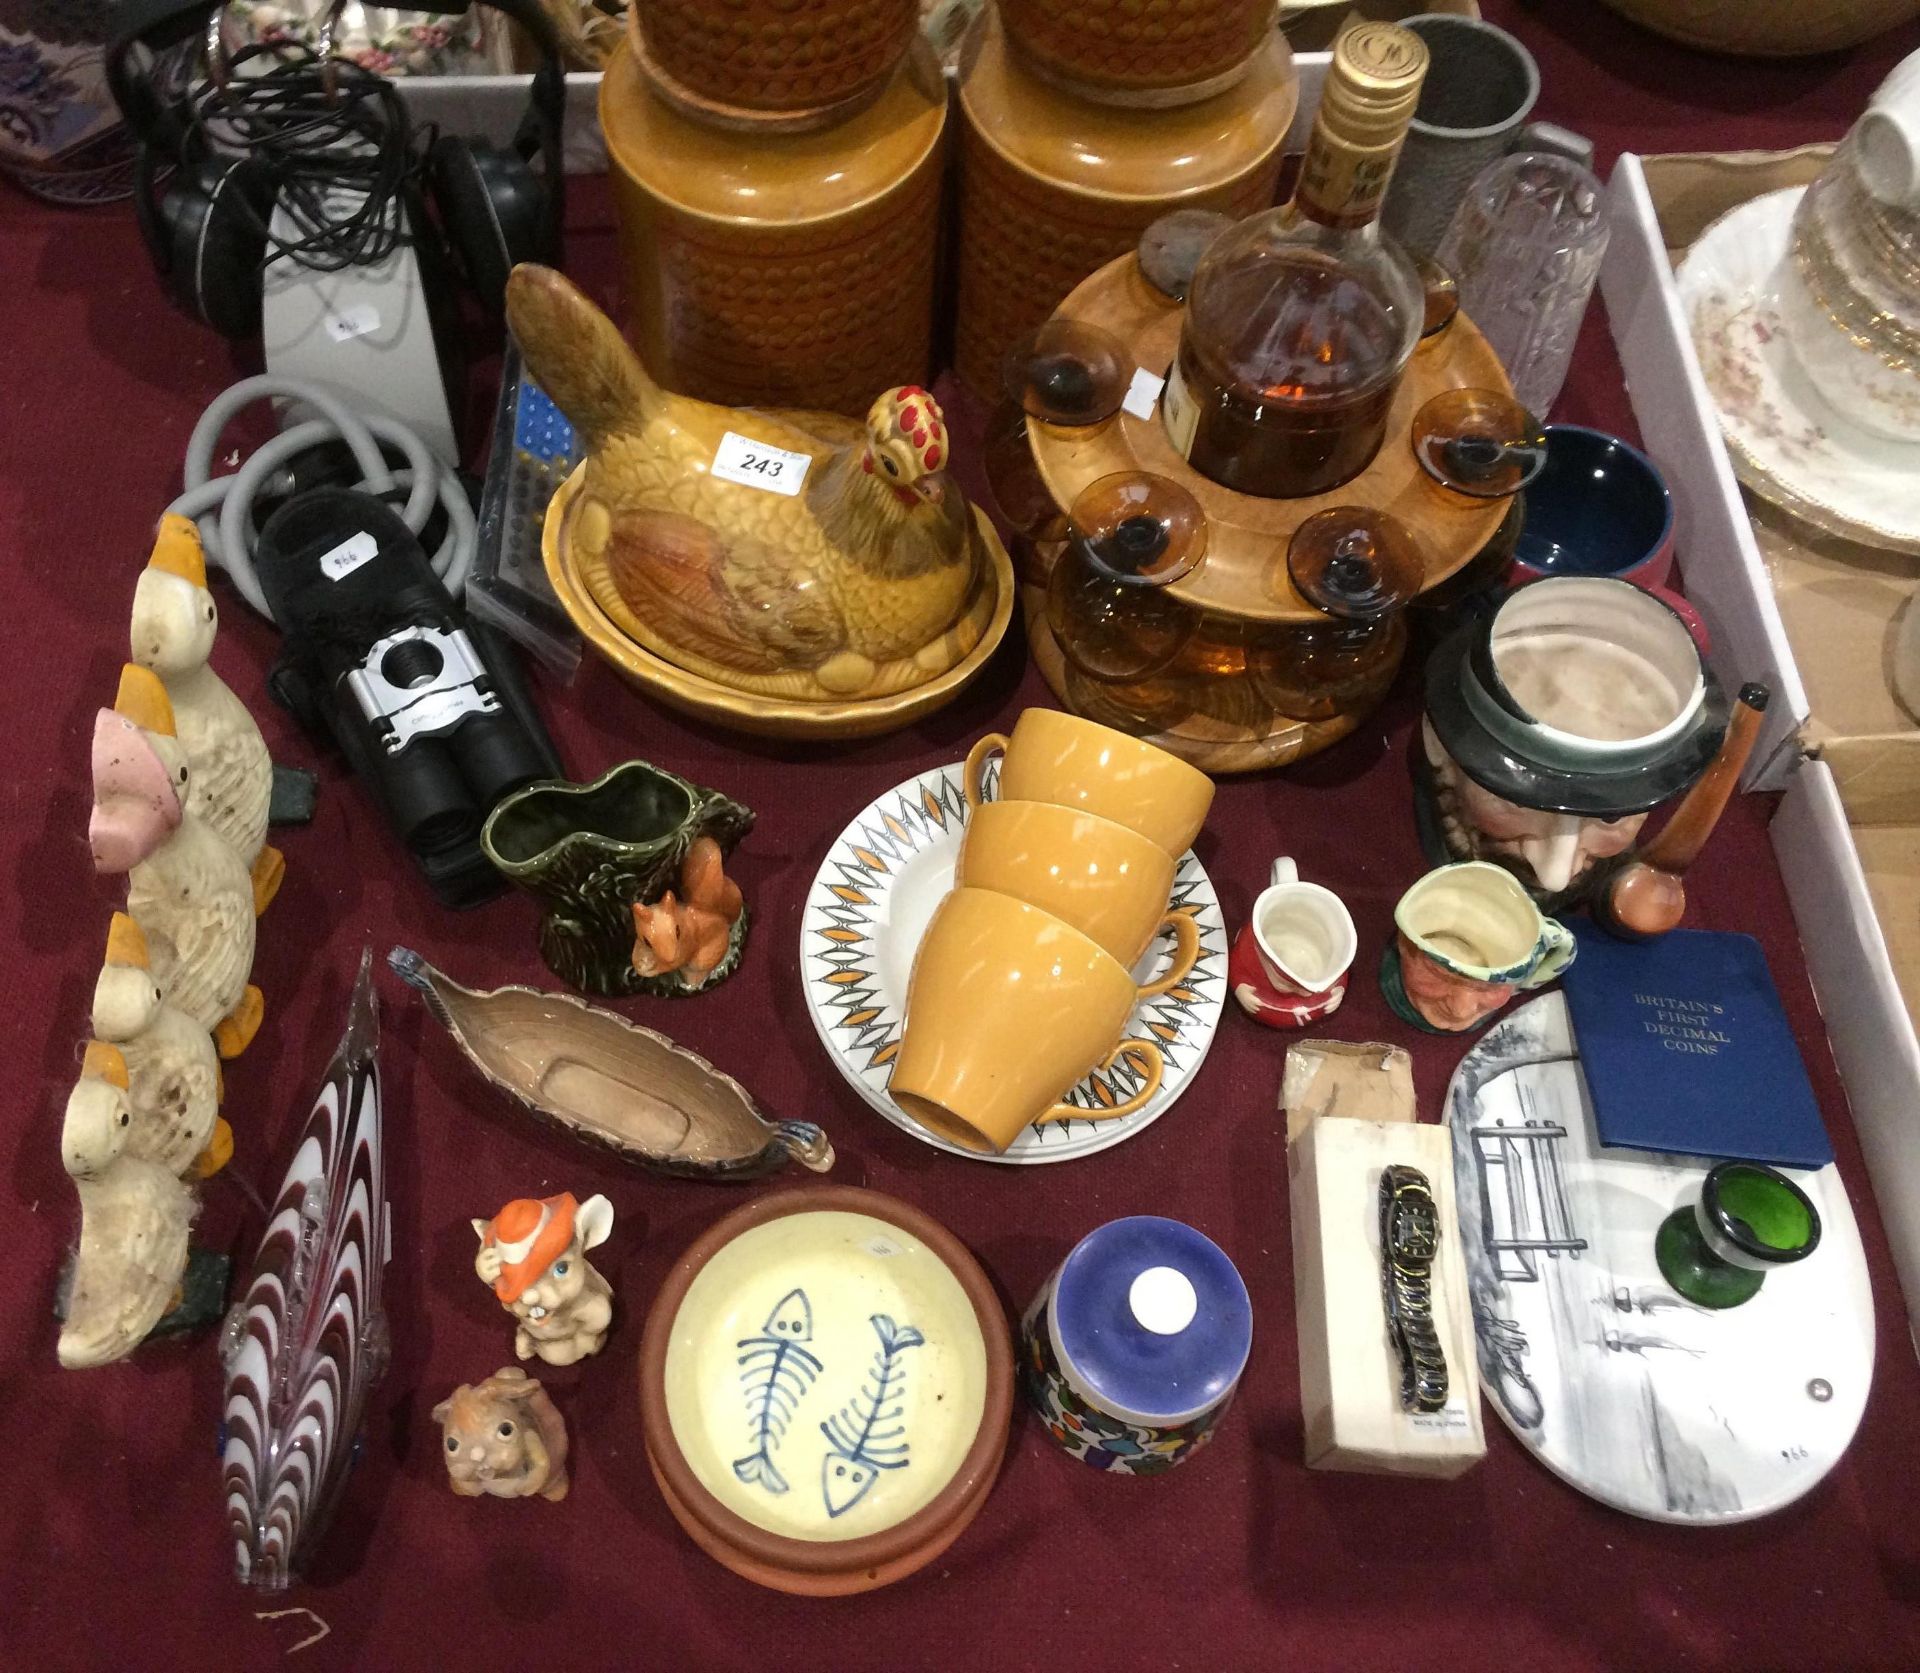 Contents to table top - Sennheiser headphones, Hornsea pottery jars, Toby jugs,